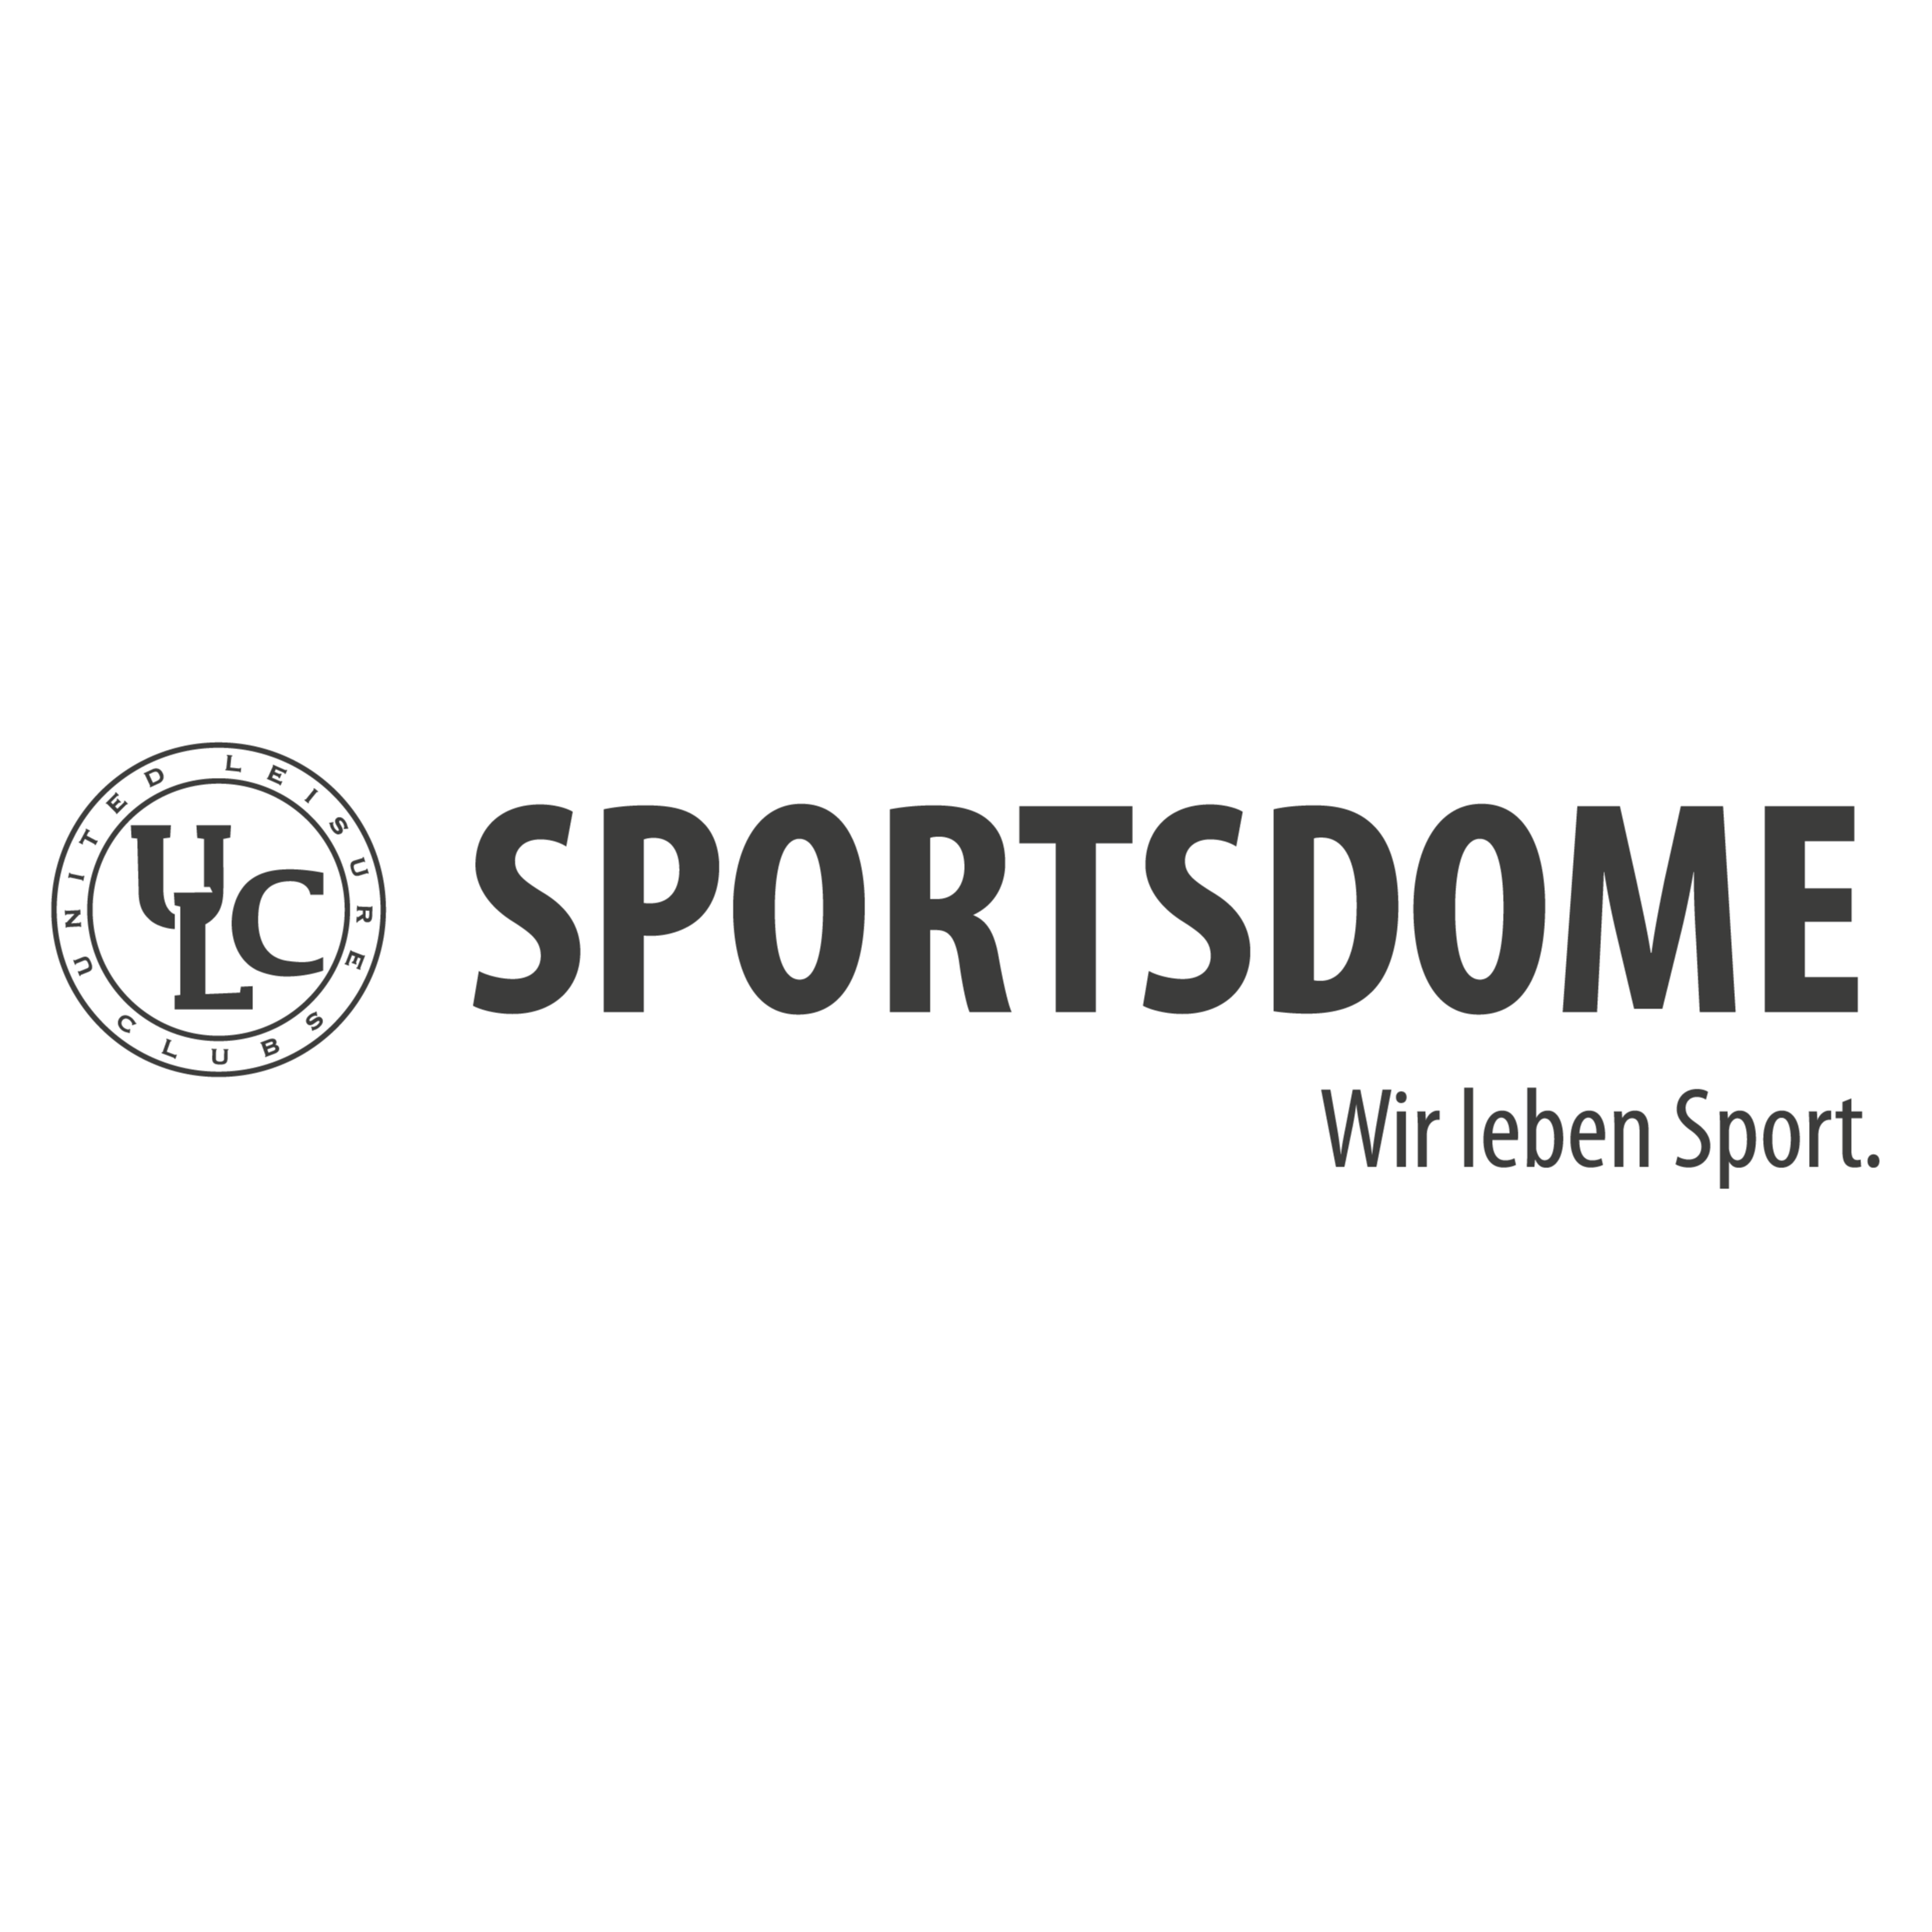 ULC Sportsdome in Ritterhude - Logo